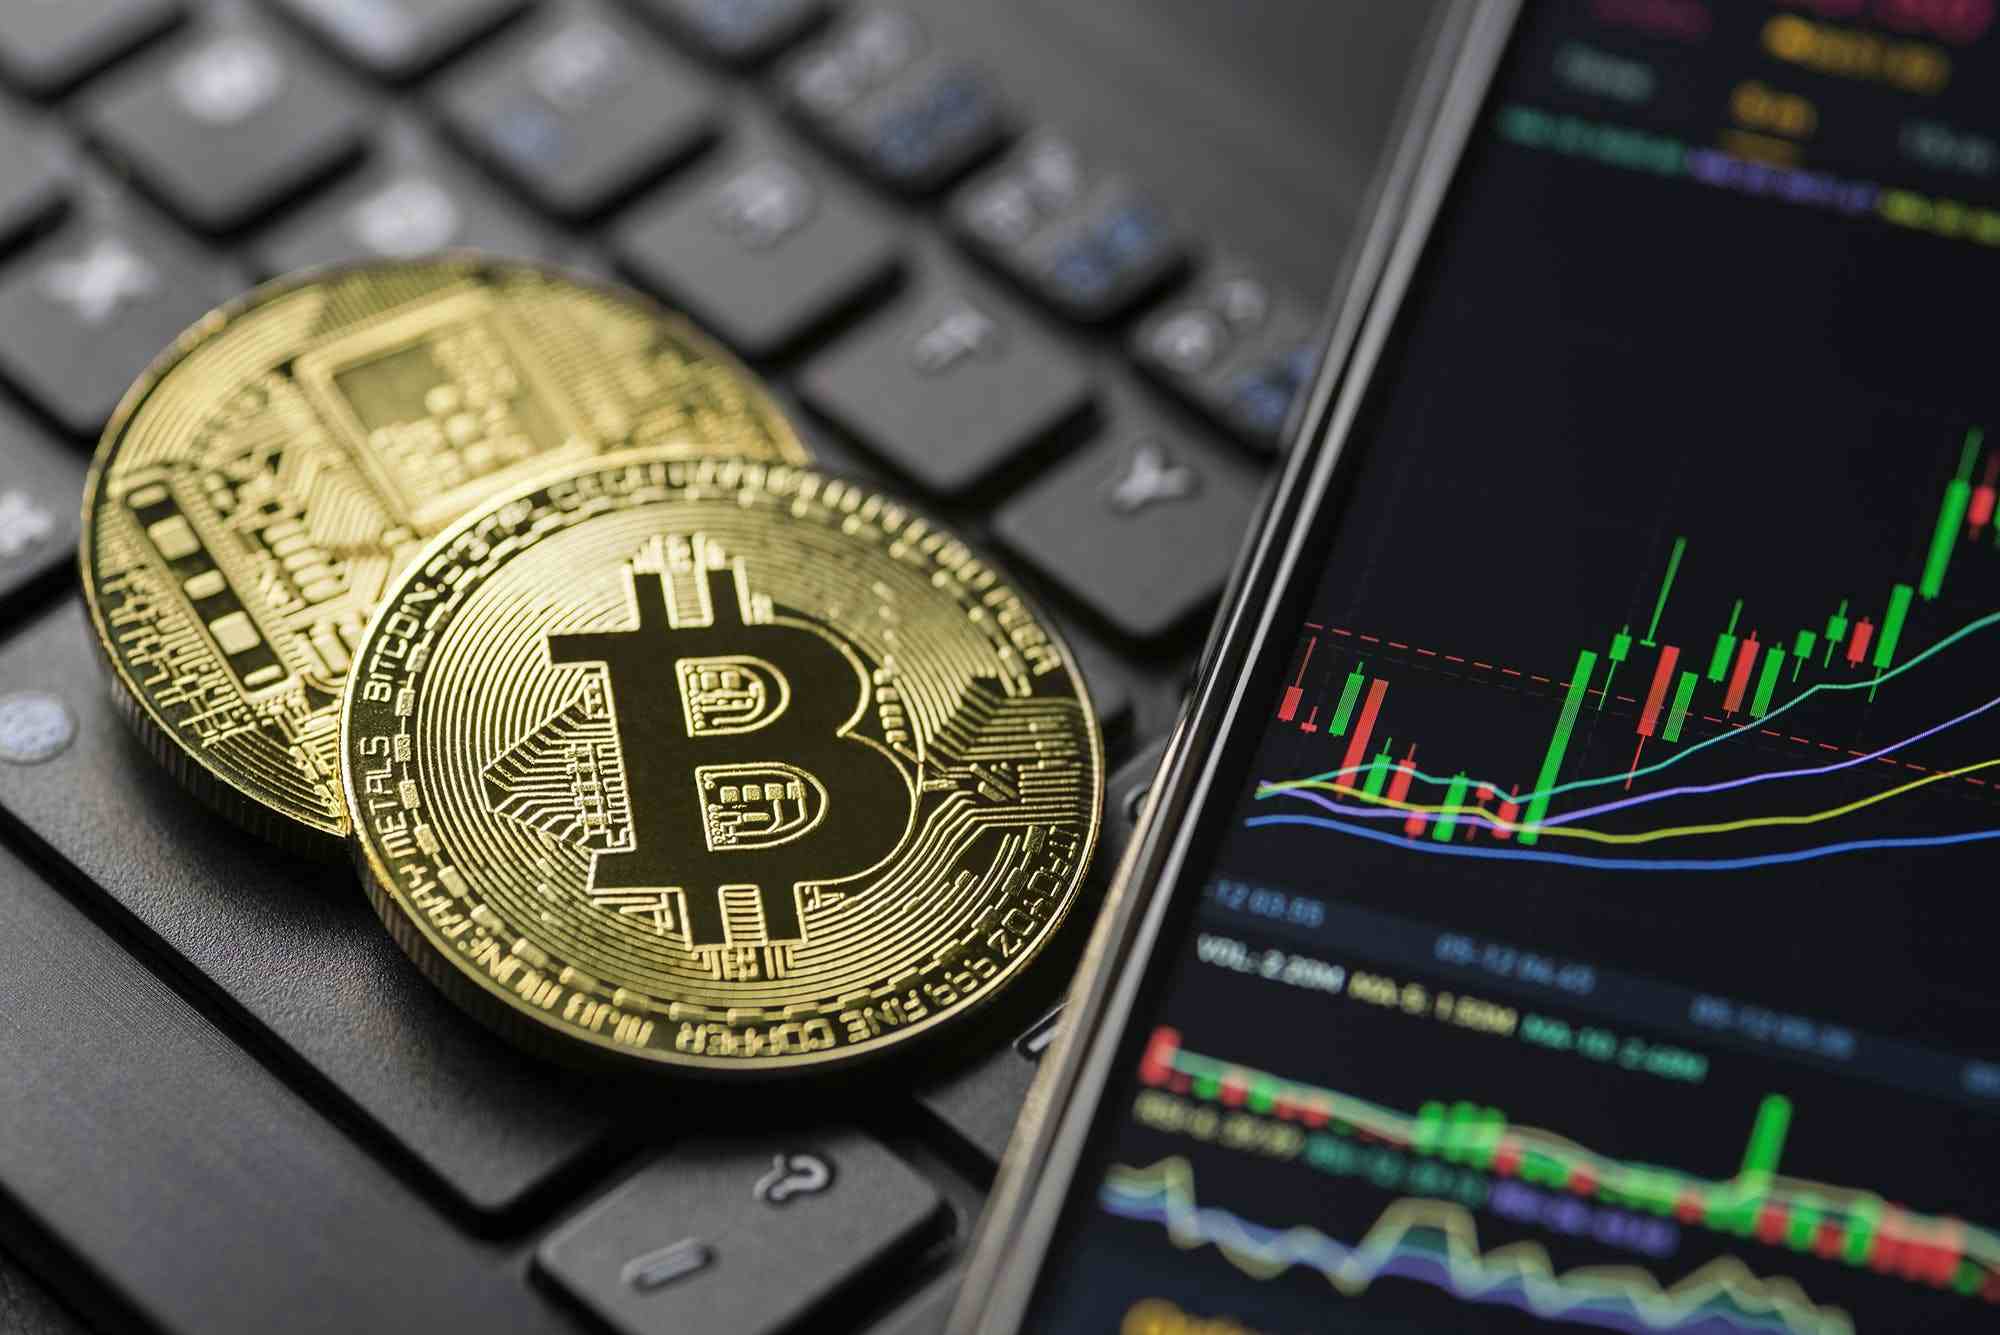 Bitcoin on computer keys and smartphone showing stocks